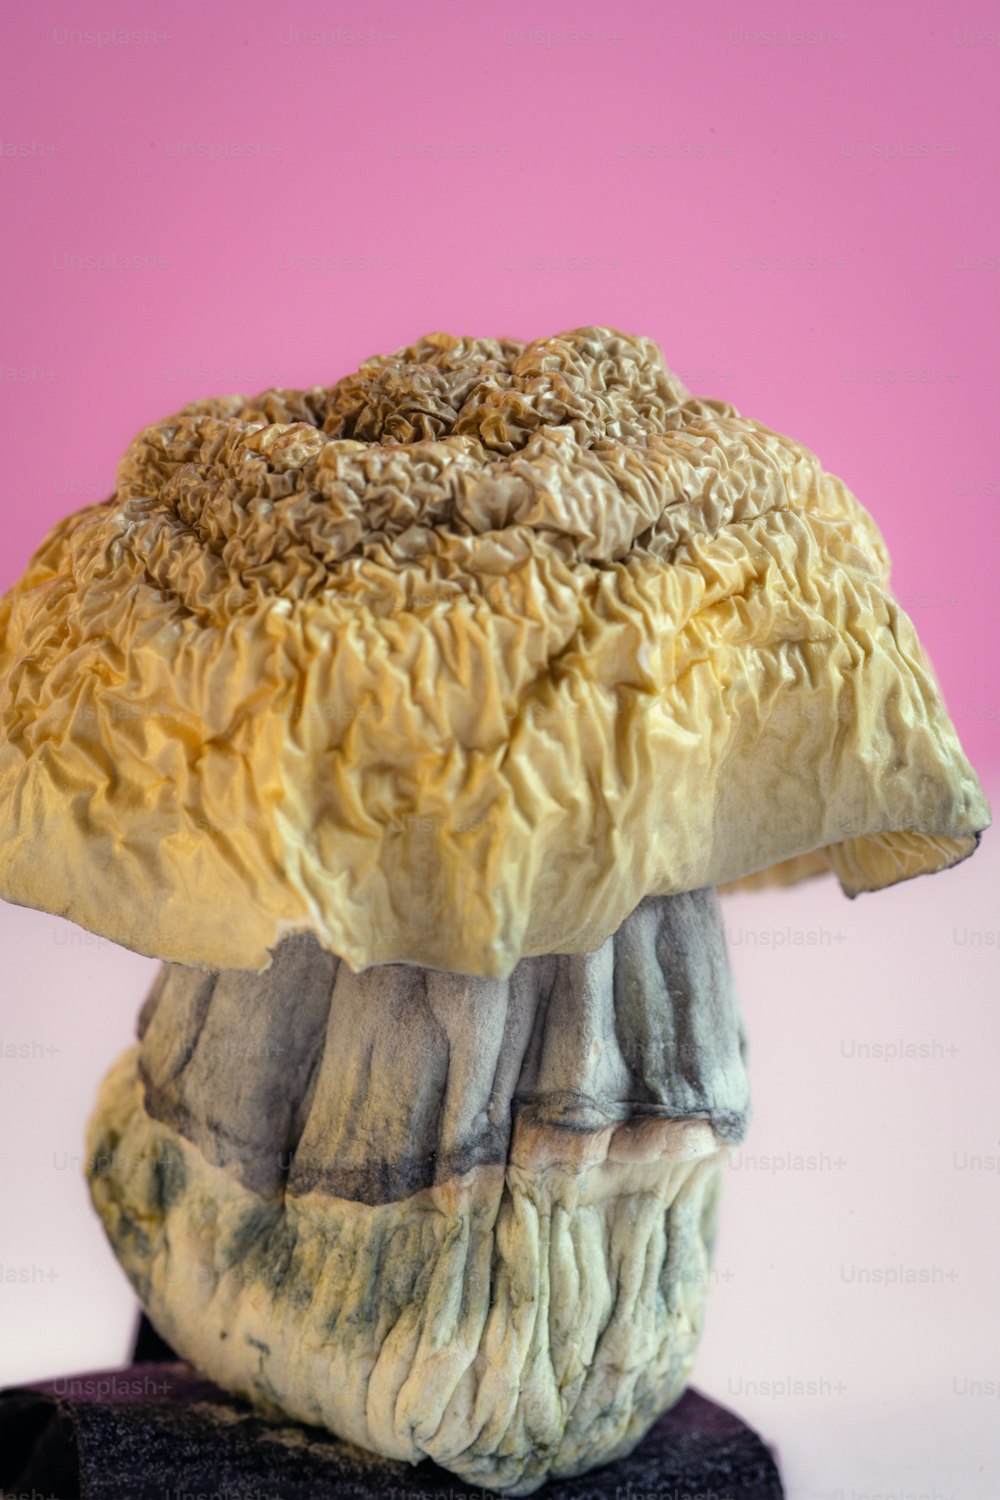 a sculpture of a mushroom on a black base